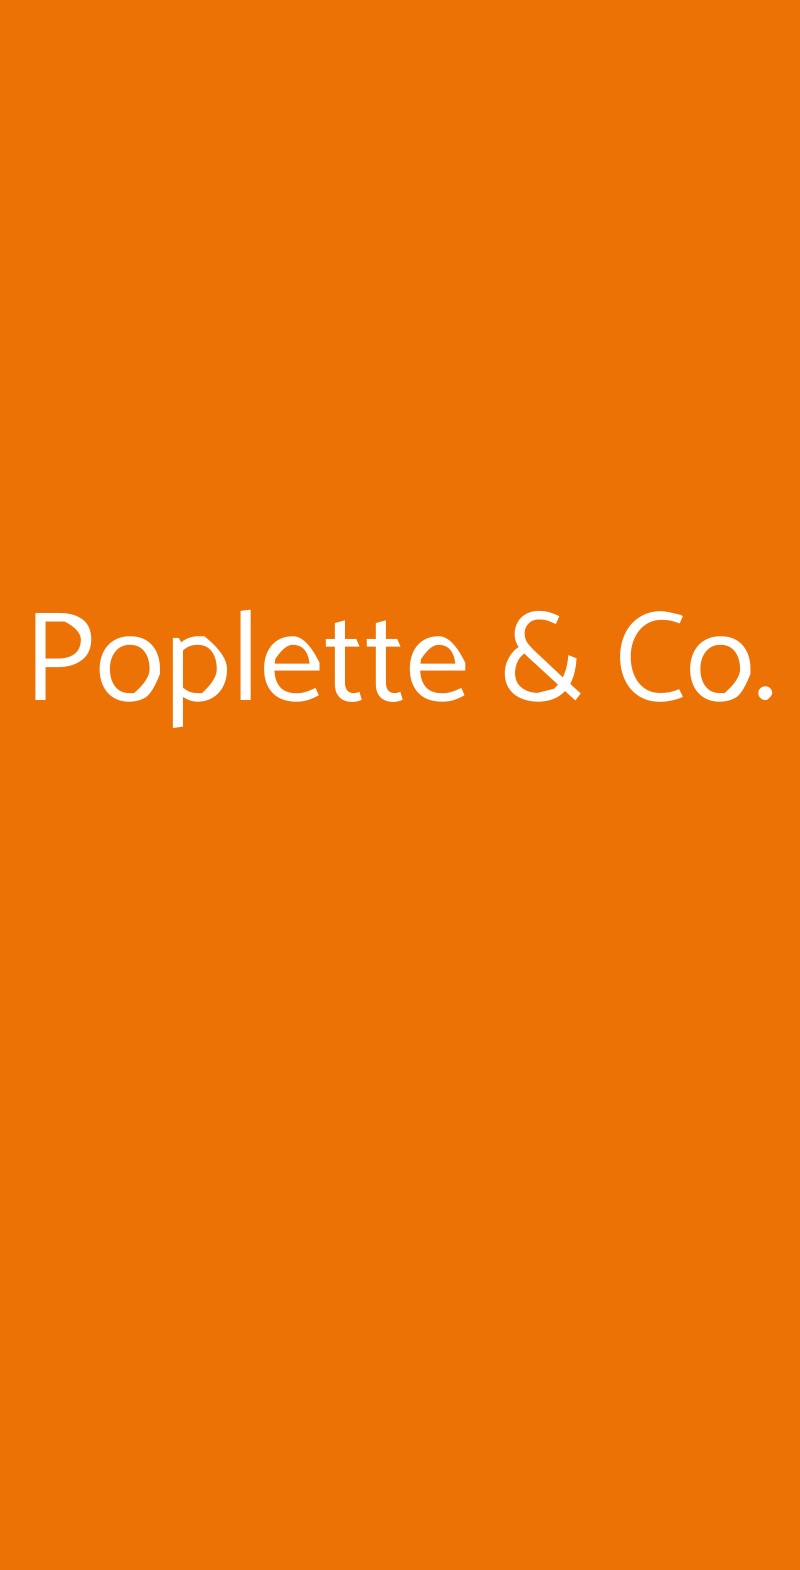 Poplette & Co. Torino menù 1 pagina